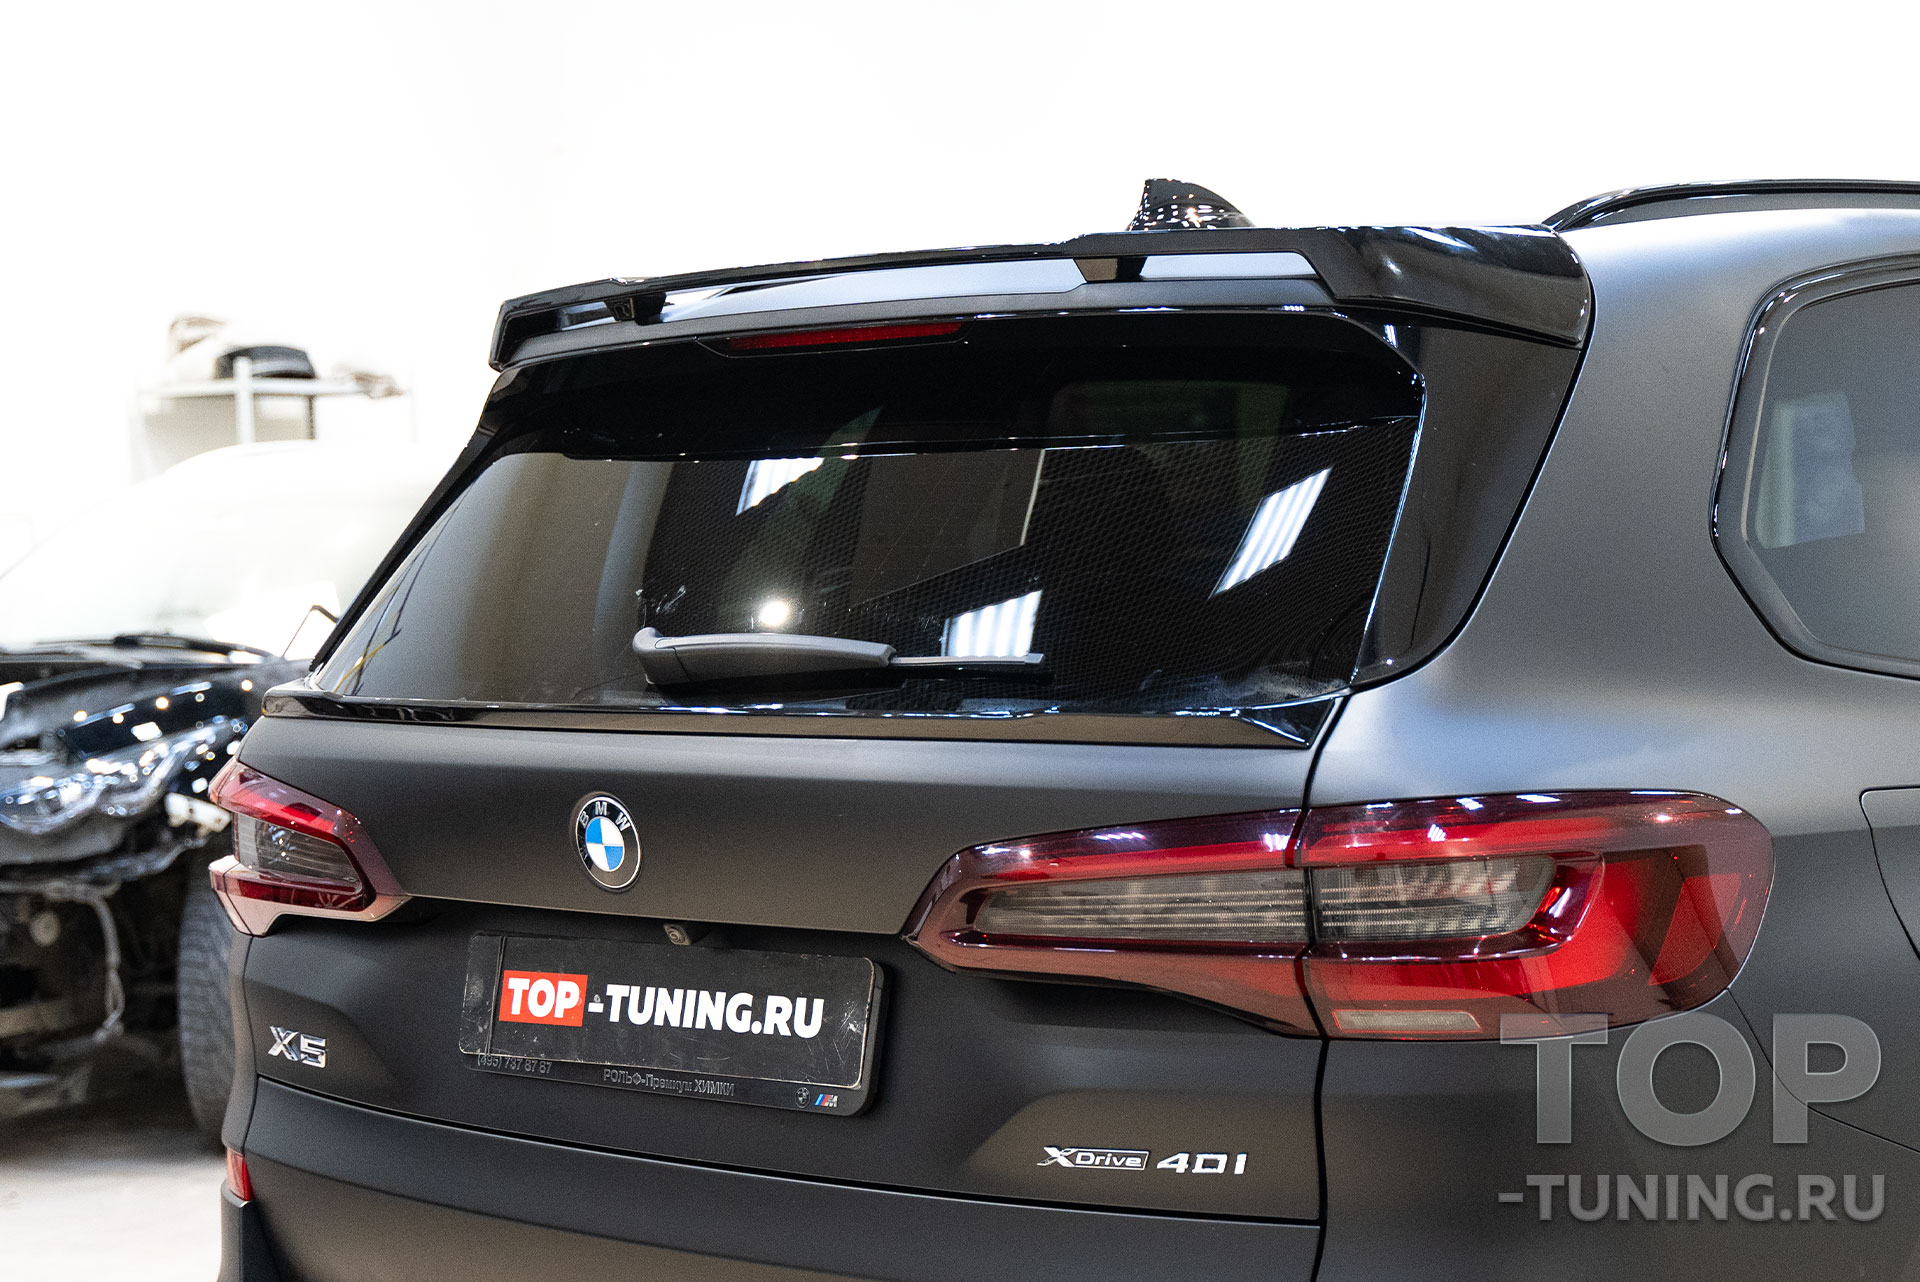 Установка тюнинг-обвеса GT Pro рестайлинг для BMW X5 G05